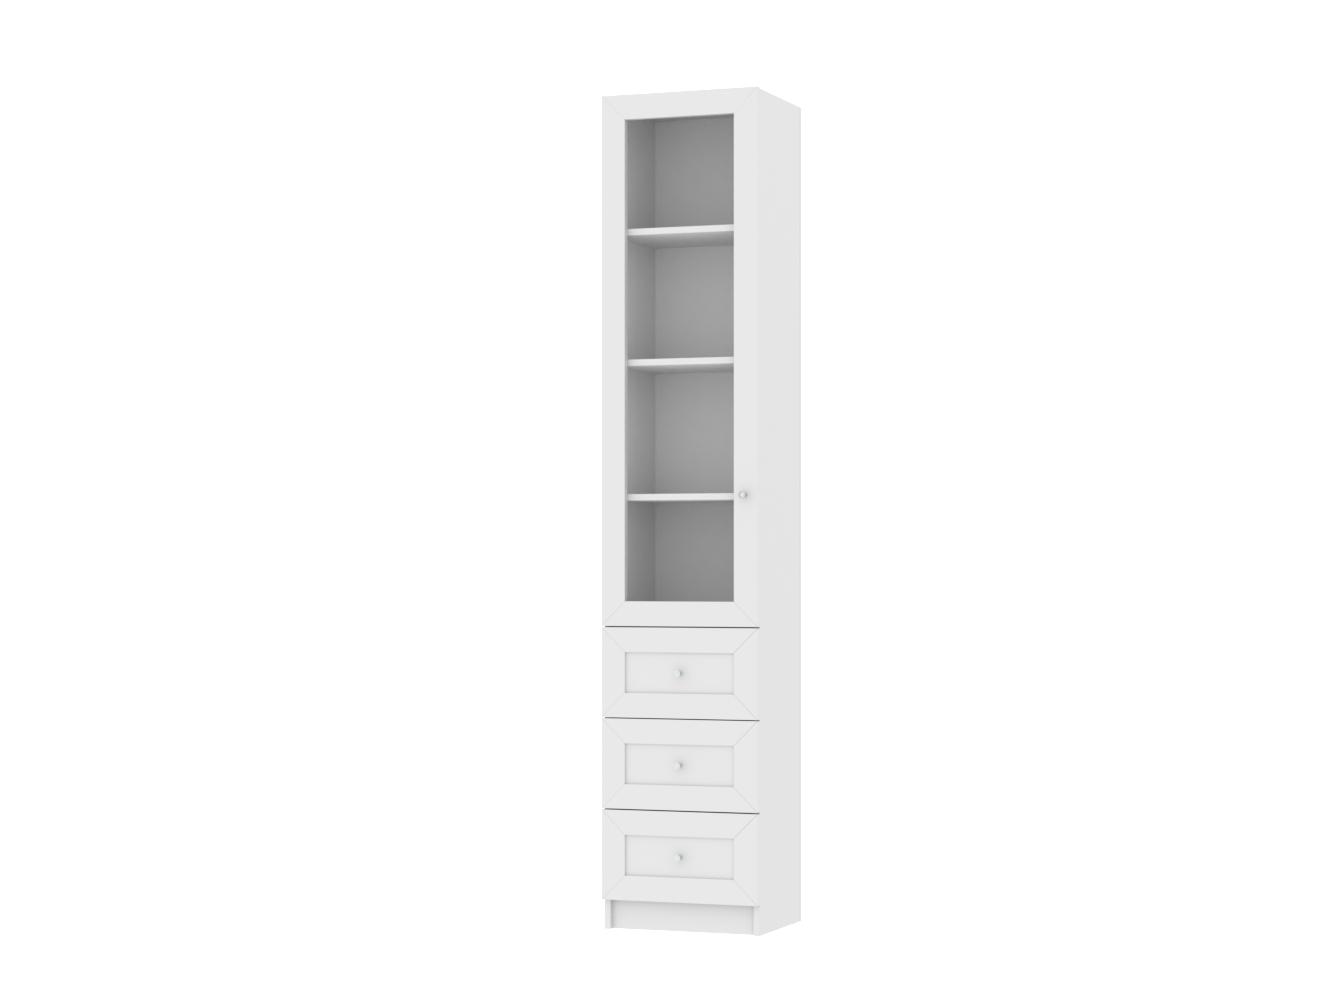  Книжный шкаф Билли 375 white ИКЕА (IKEA) изображение товара